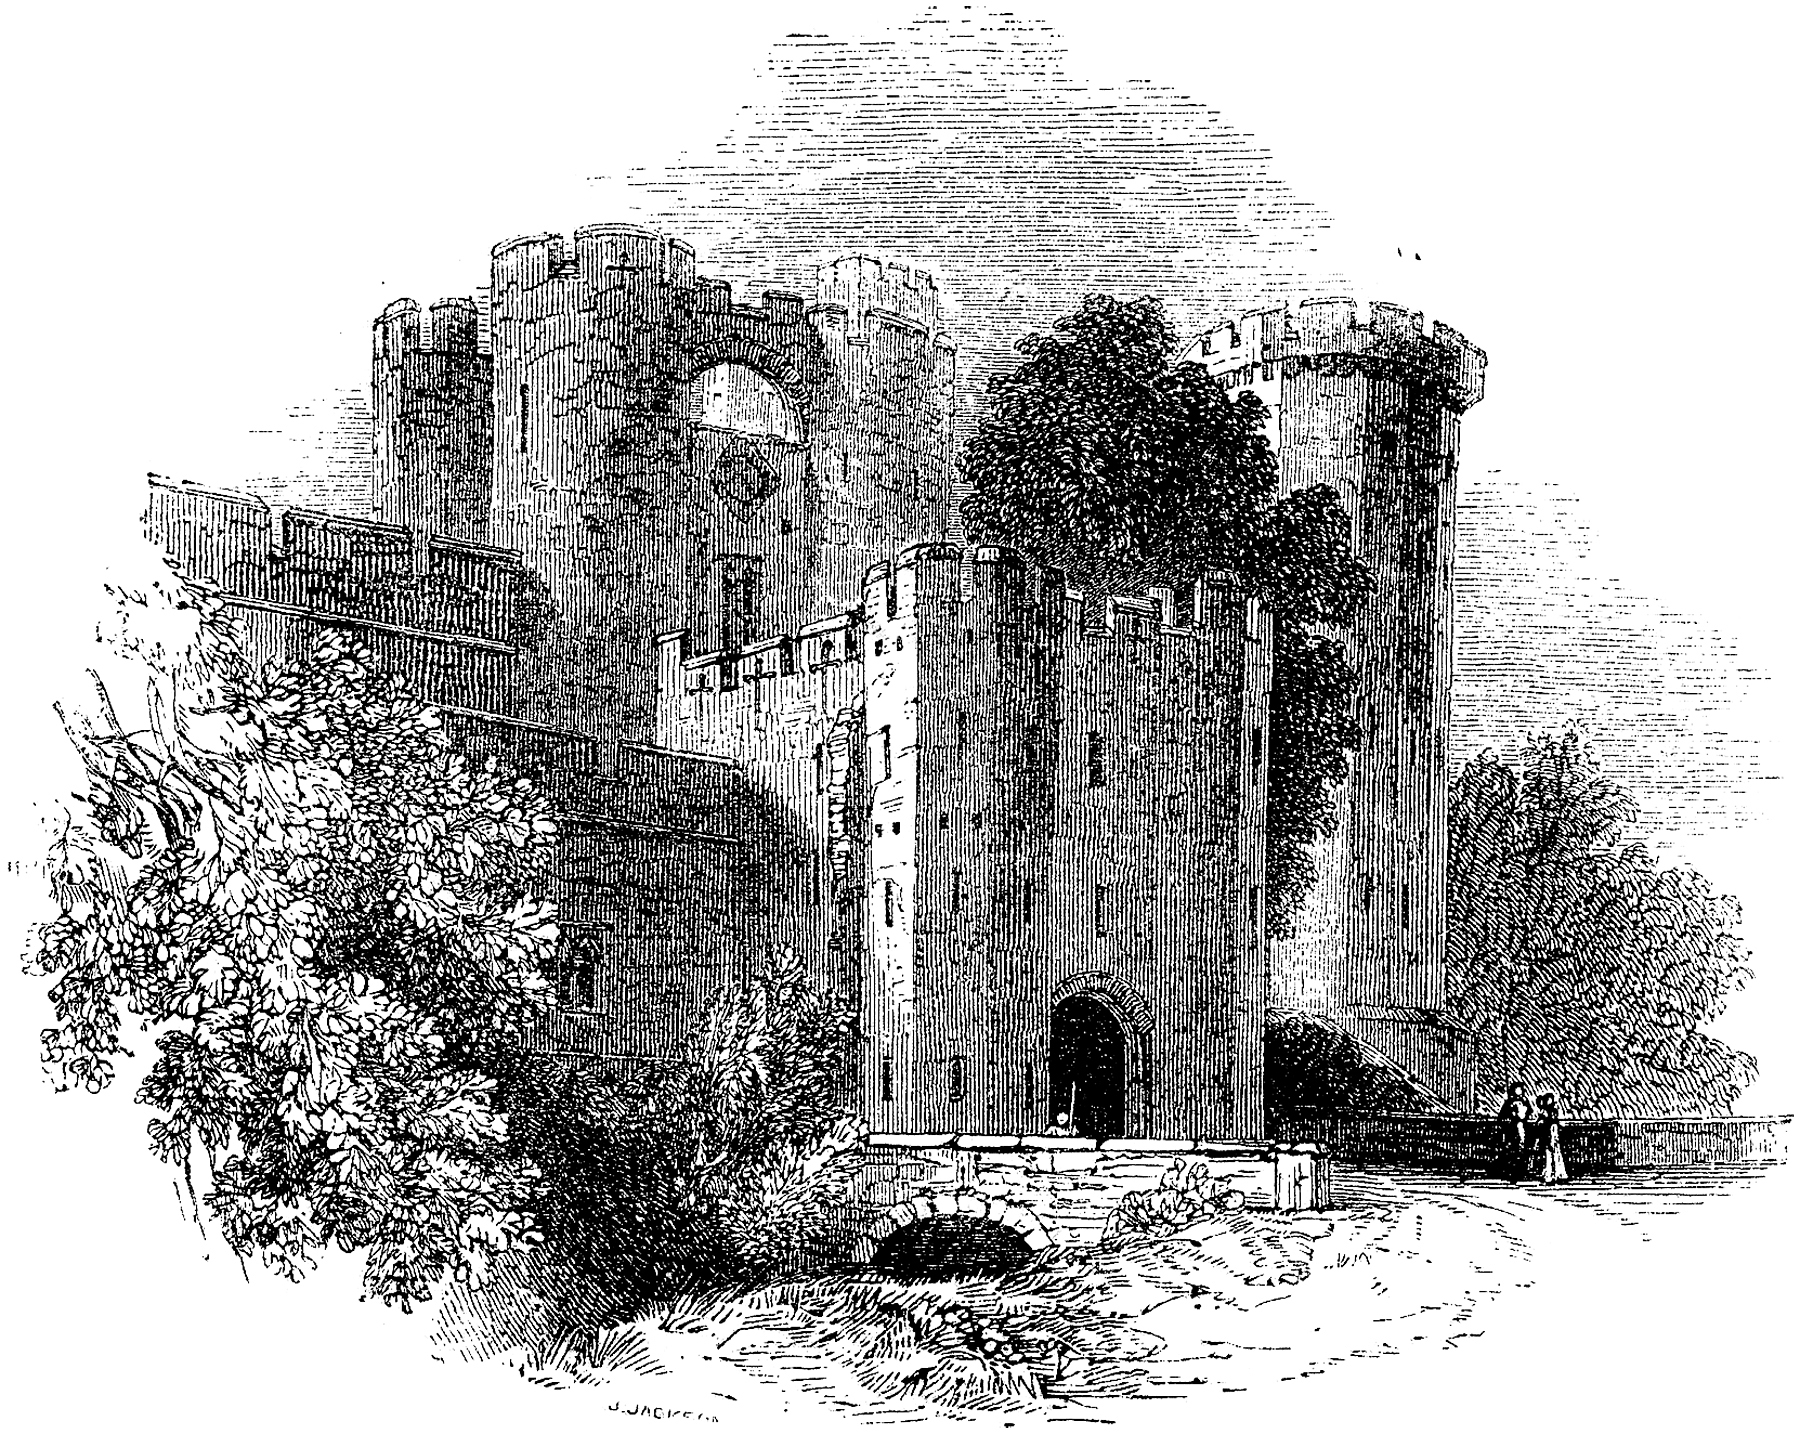 Castle Clipart-medieval castle drawing style illustration clip art